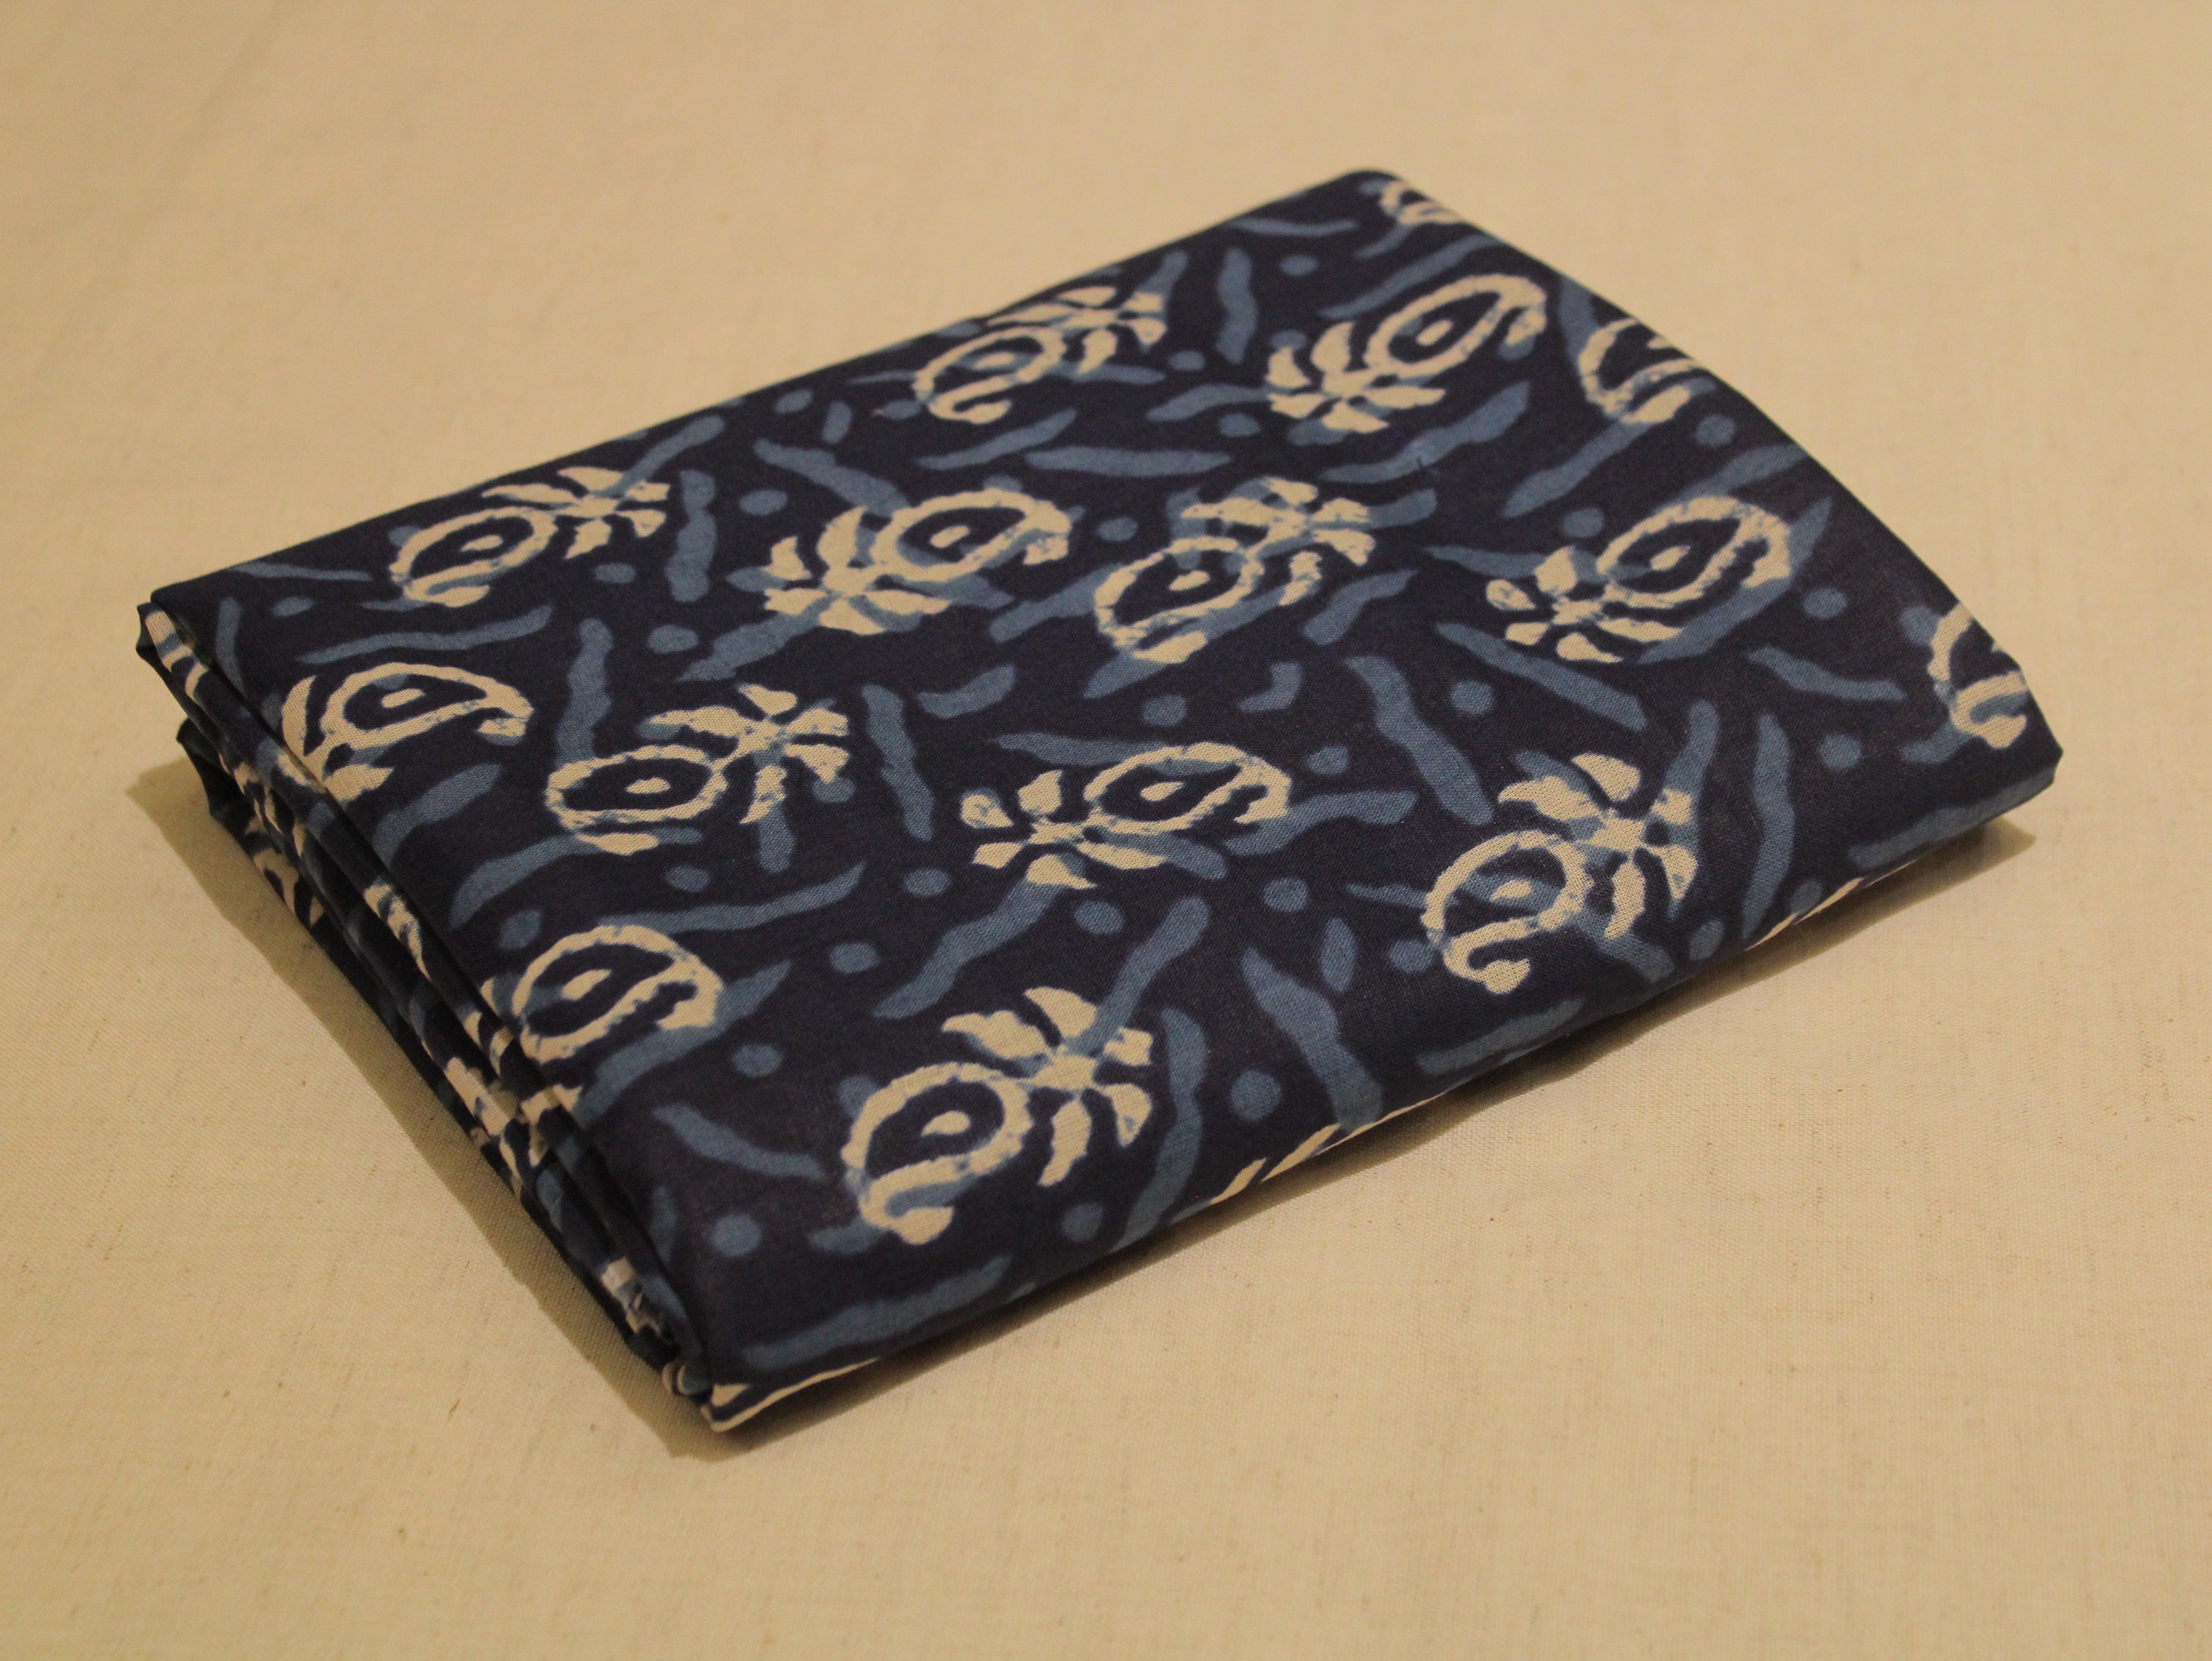 Euphoric - Cotton Hand block Printed Fabric by M'Foks - Indigo - M'Foks